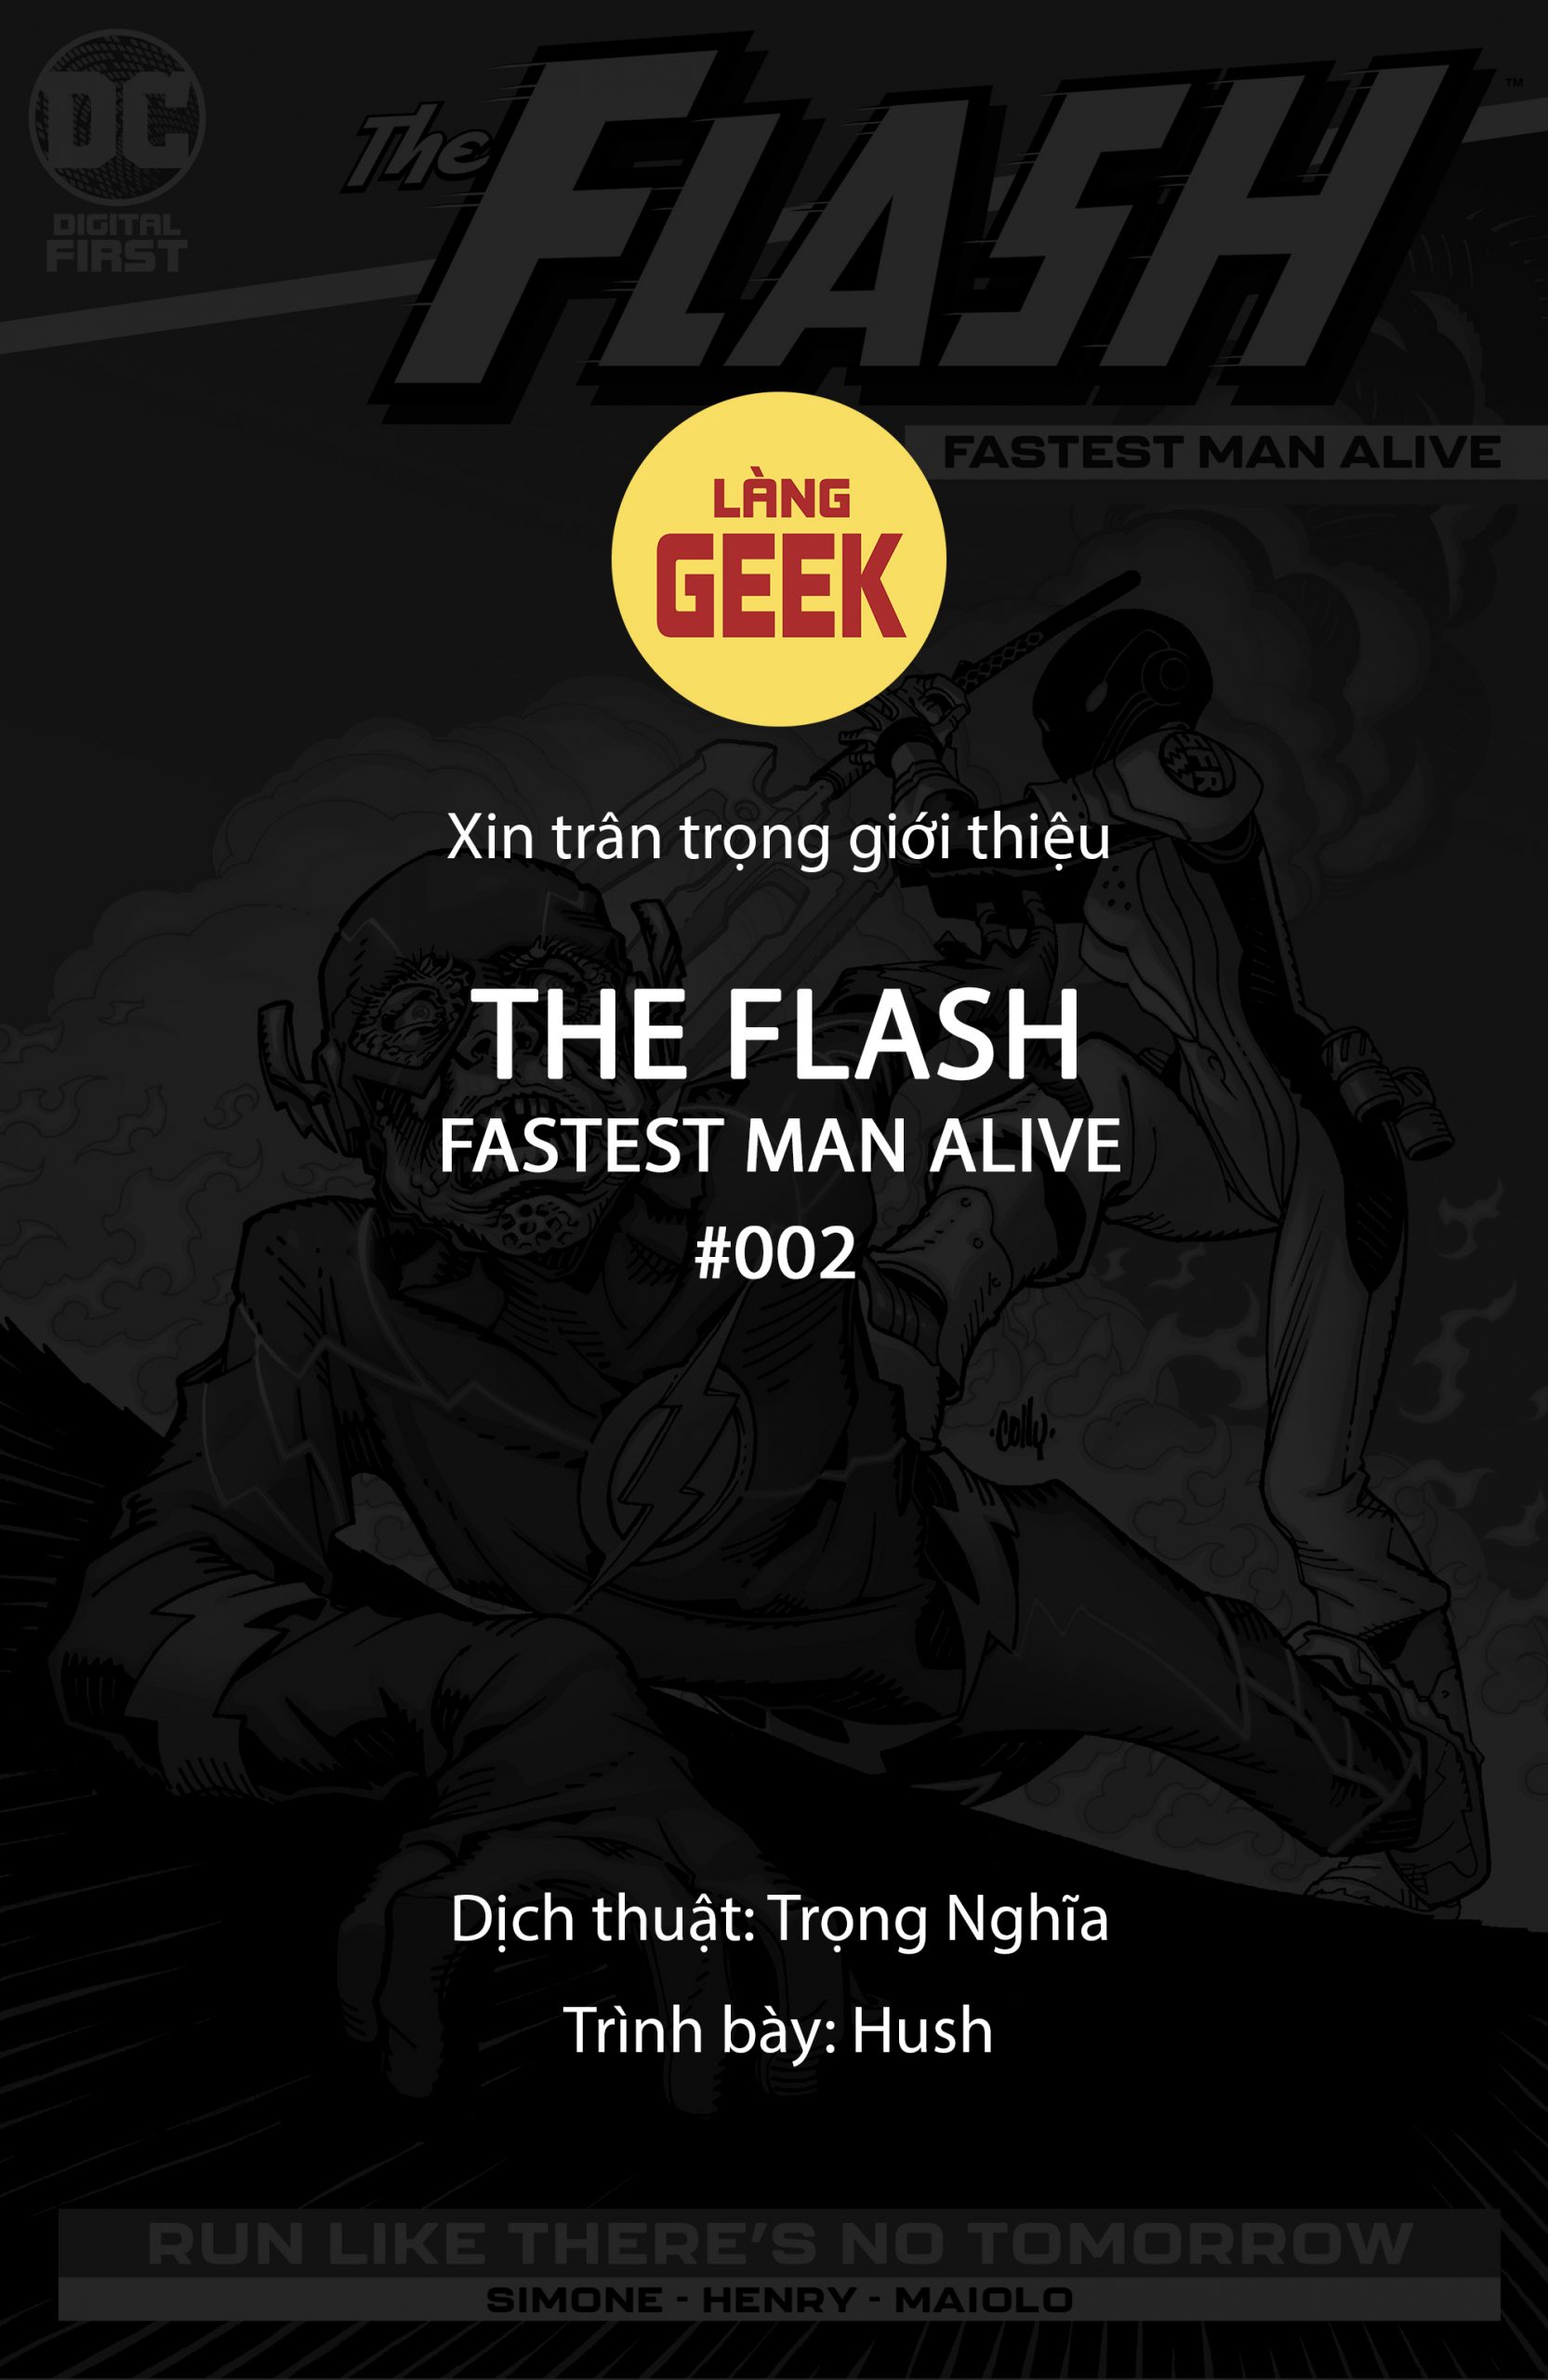 https://langgeek.net/wp-content/uploads/2021/12/Flash-Fastest-Man-Alive-002-000-1-scaled.jpg